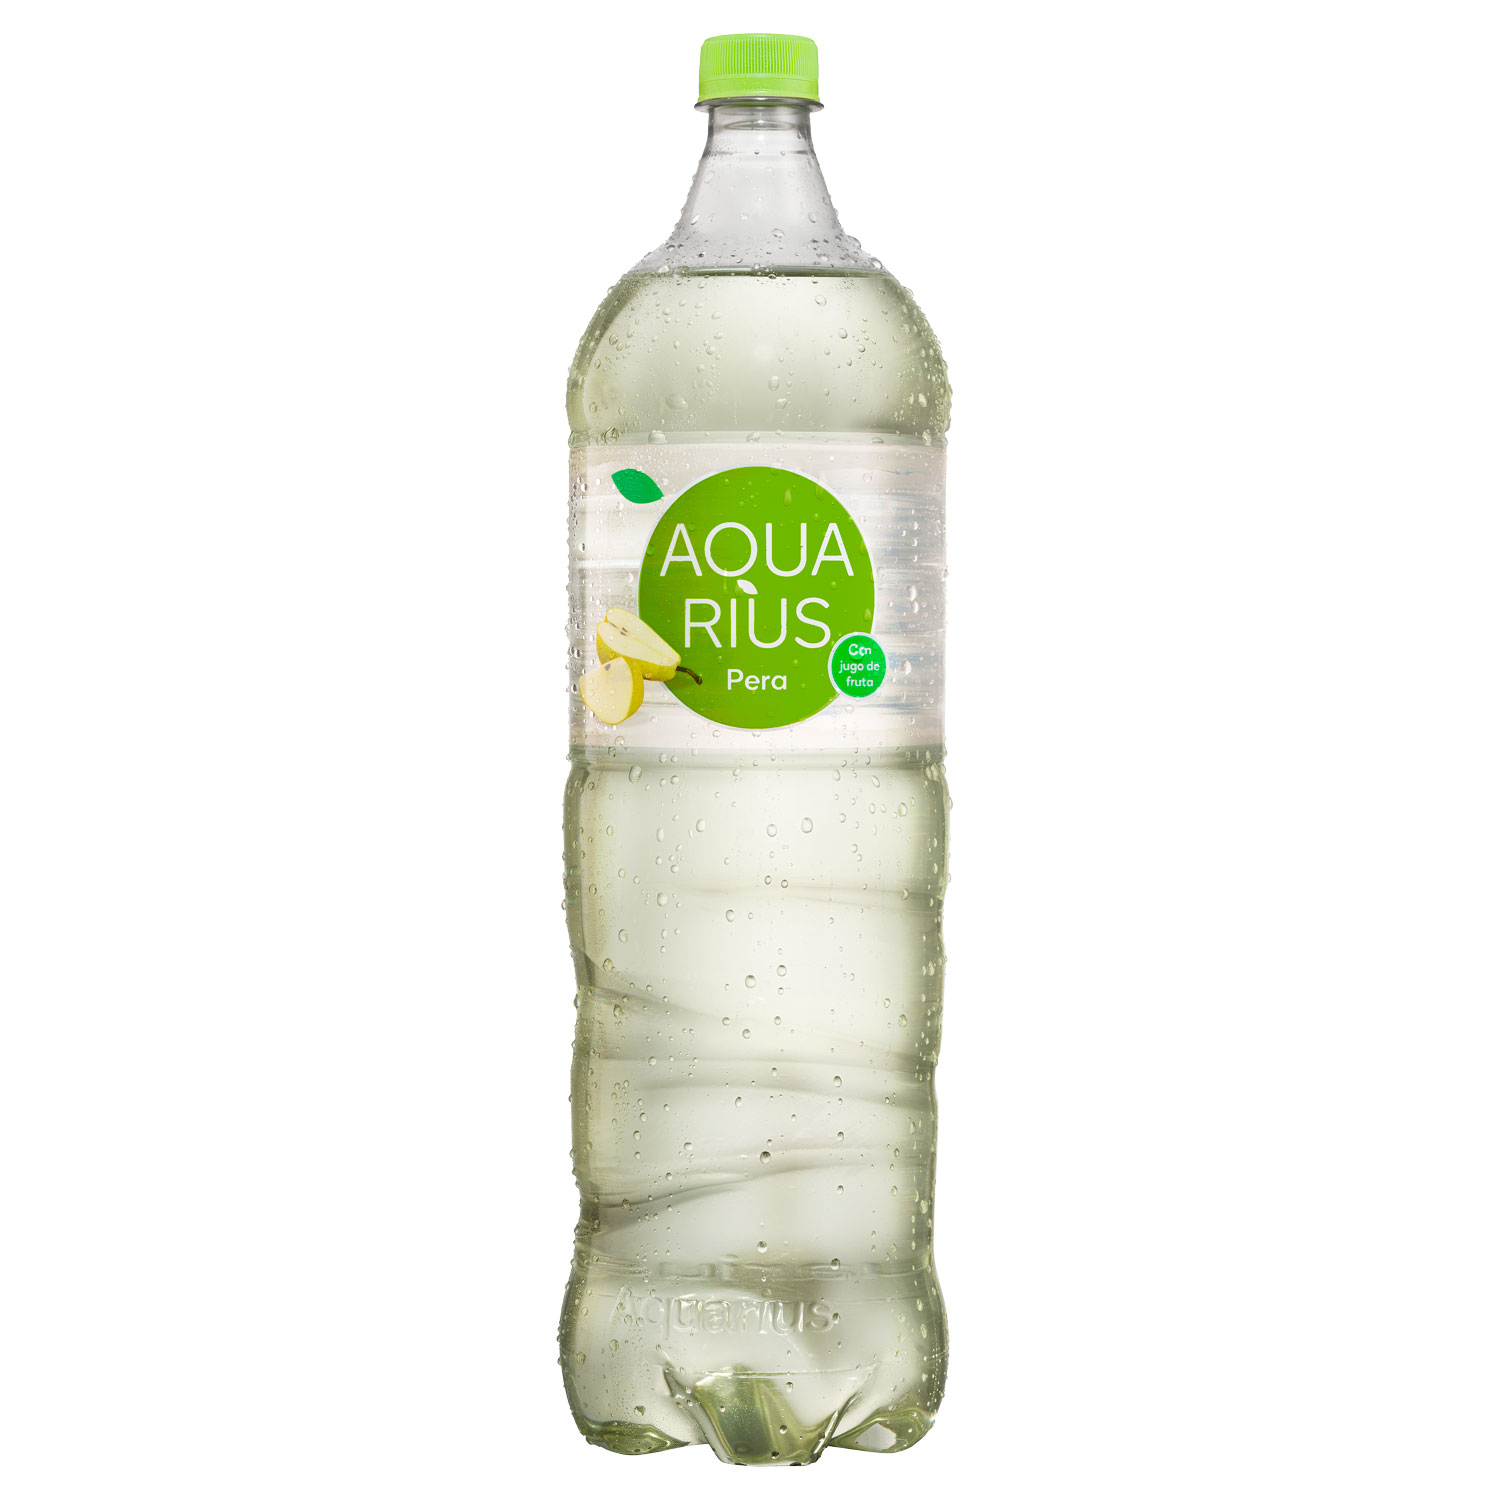 Botella de Aquarius Pera Mediana